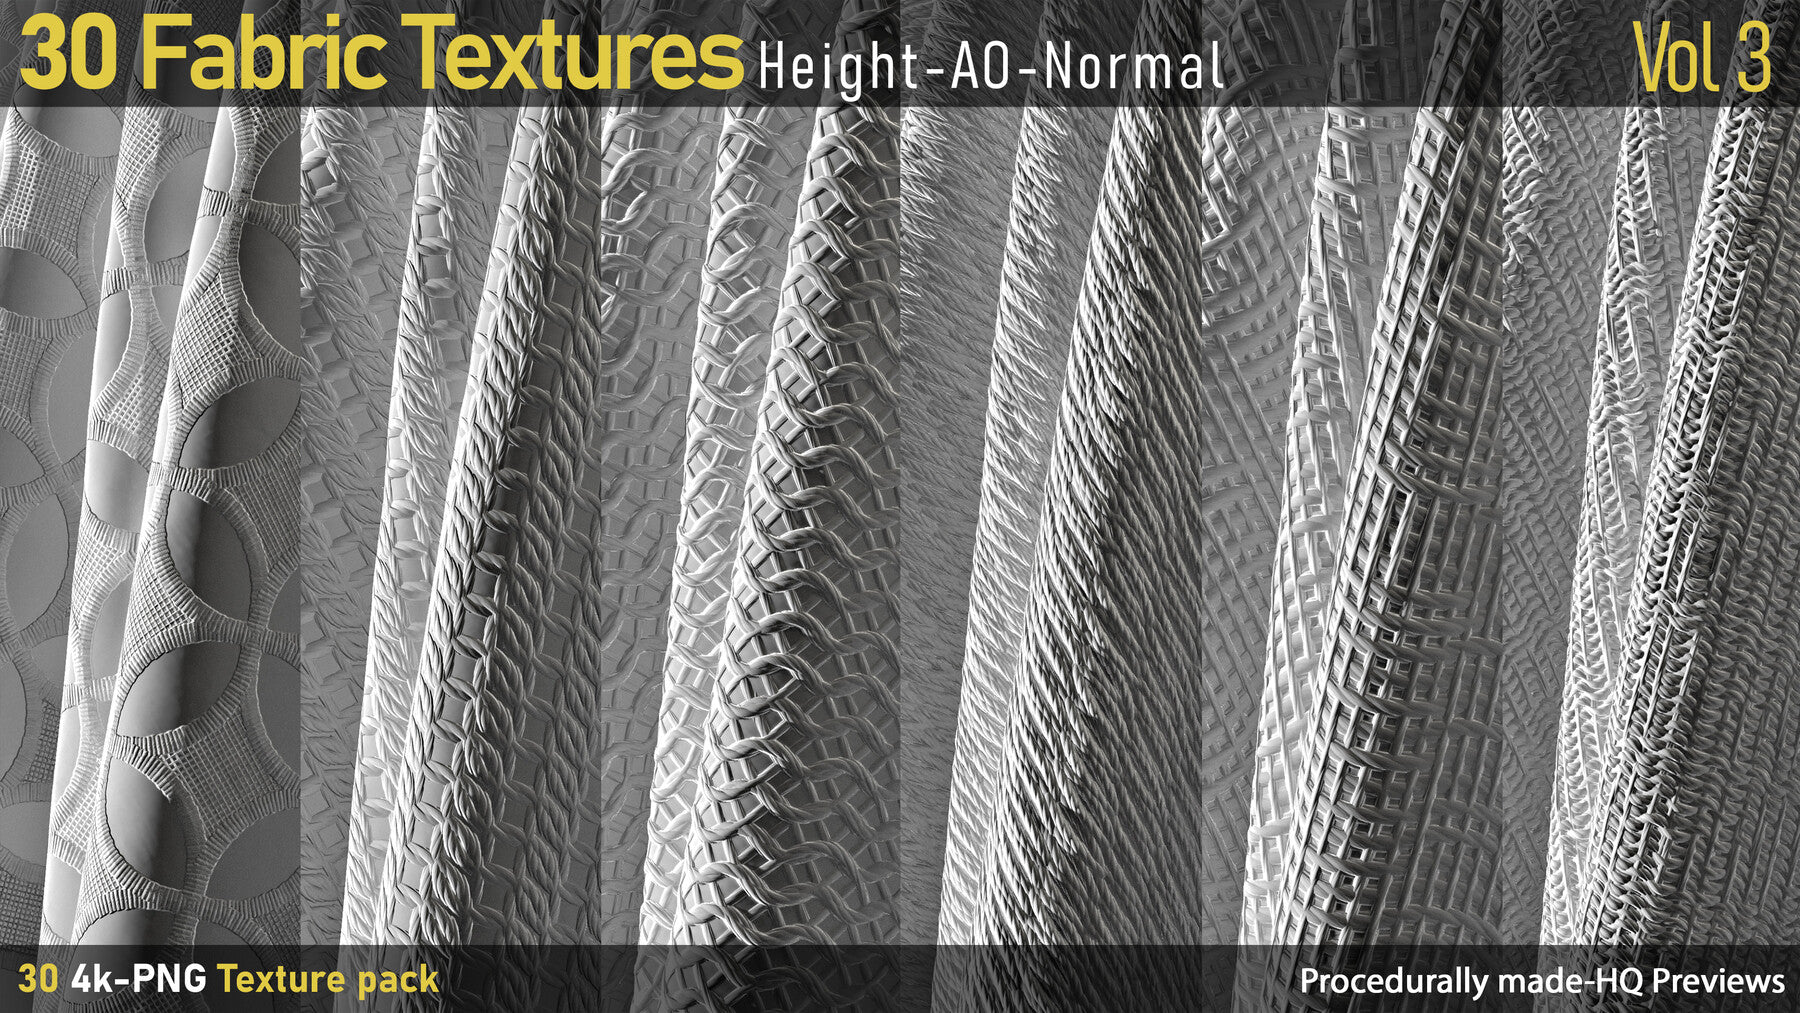 30 Fabric Textures-AO-Height-Normal-Vol3